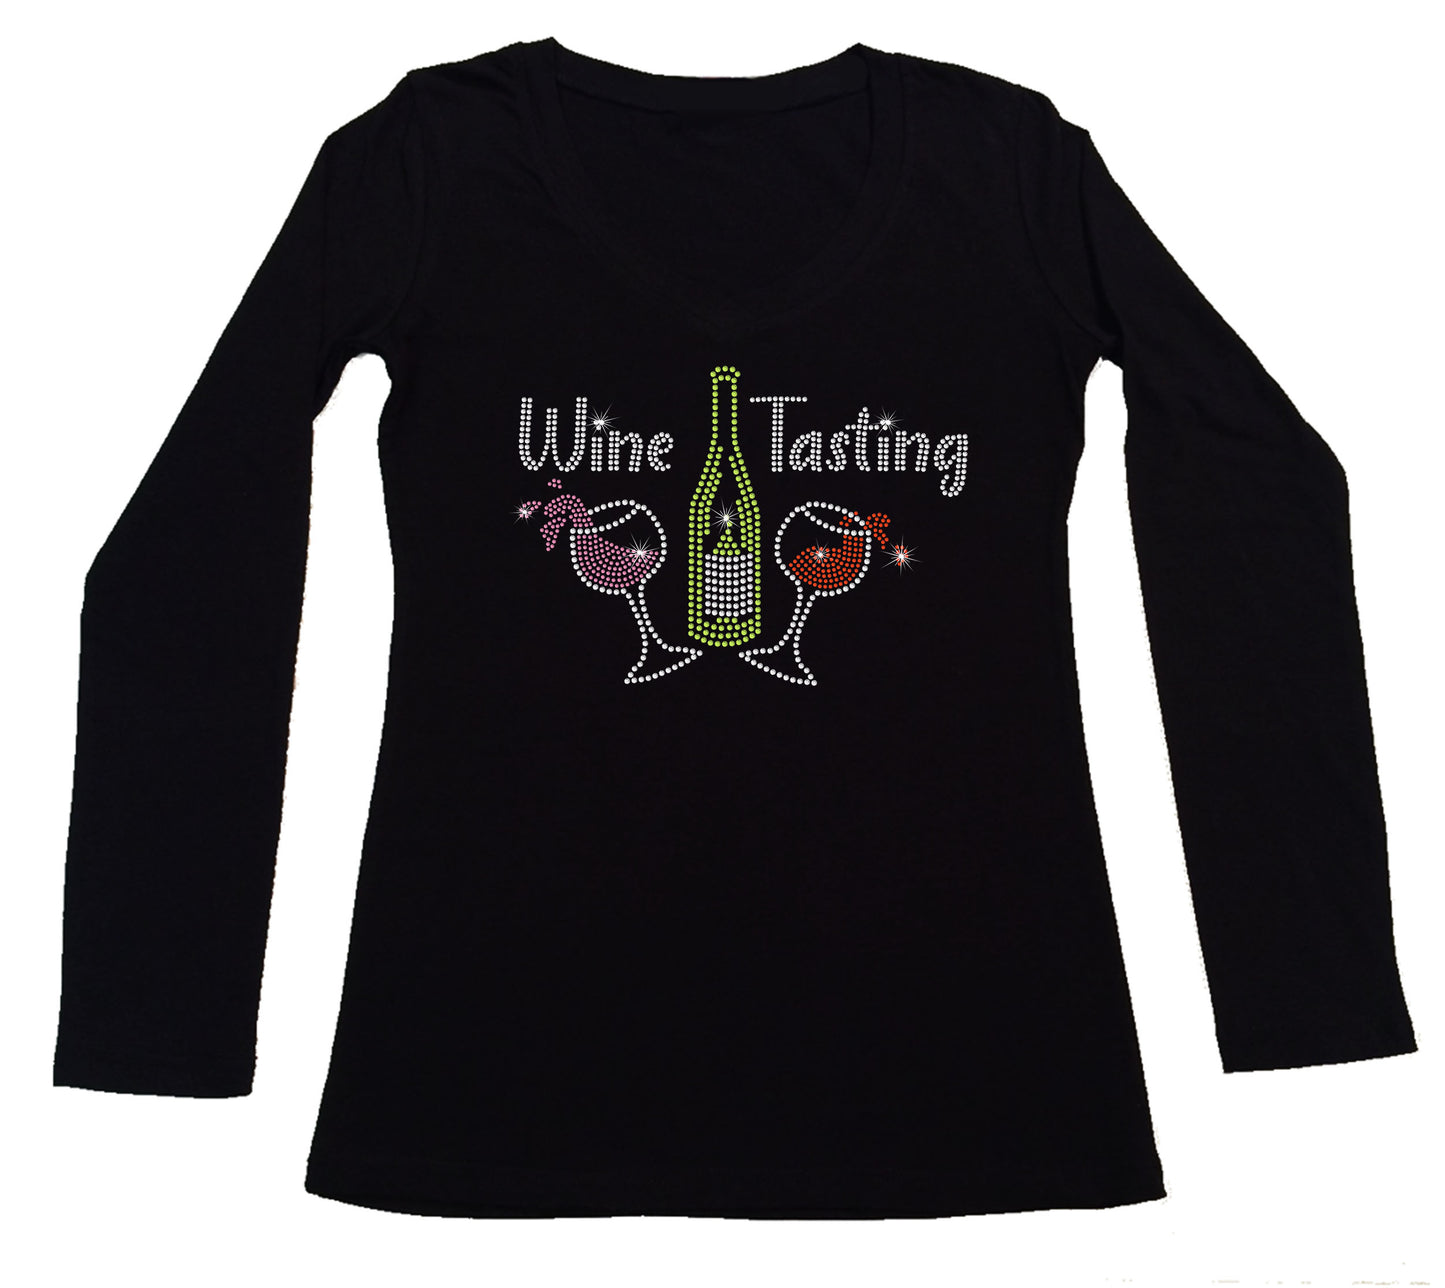 Women's Rhinestone Fitted Tight Snug Shirt Wine Tasting - Wine Glasses and Wine Bottles